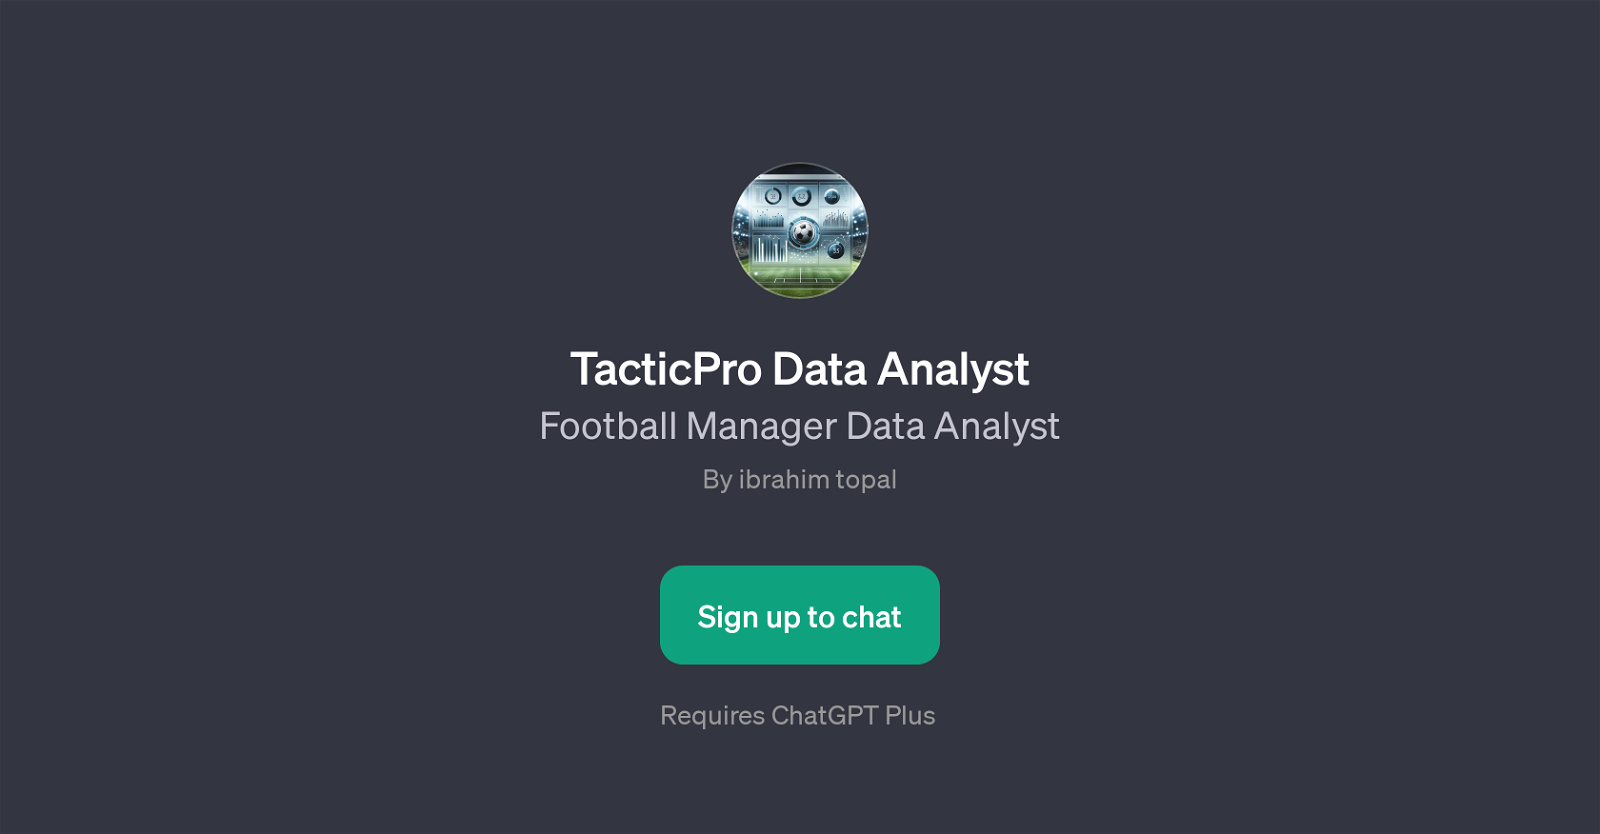 TacticPro Data Analyst website